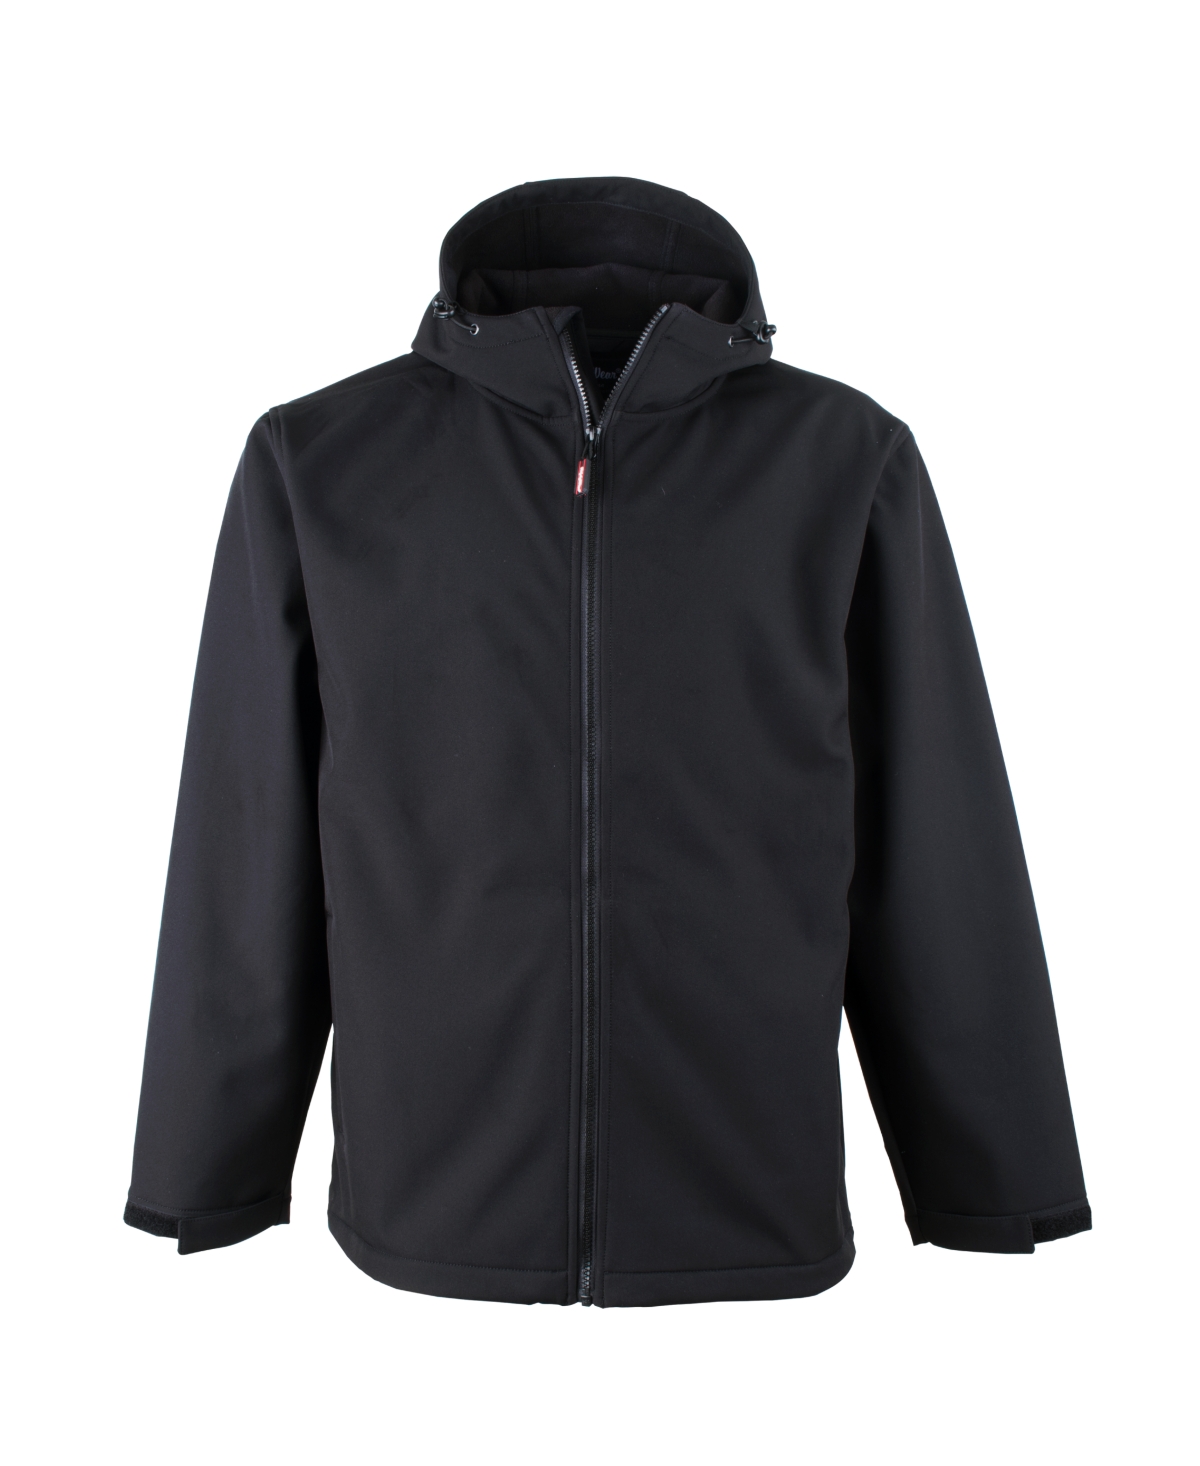 Men's Warm Water-Resistant Lightweight Softshell Jacket with Hood - Black